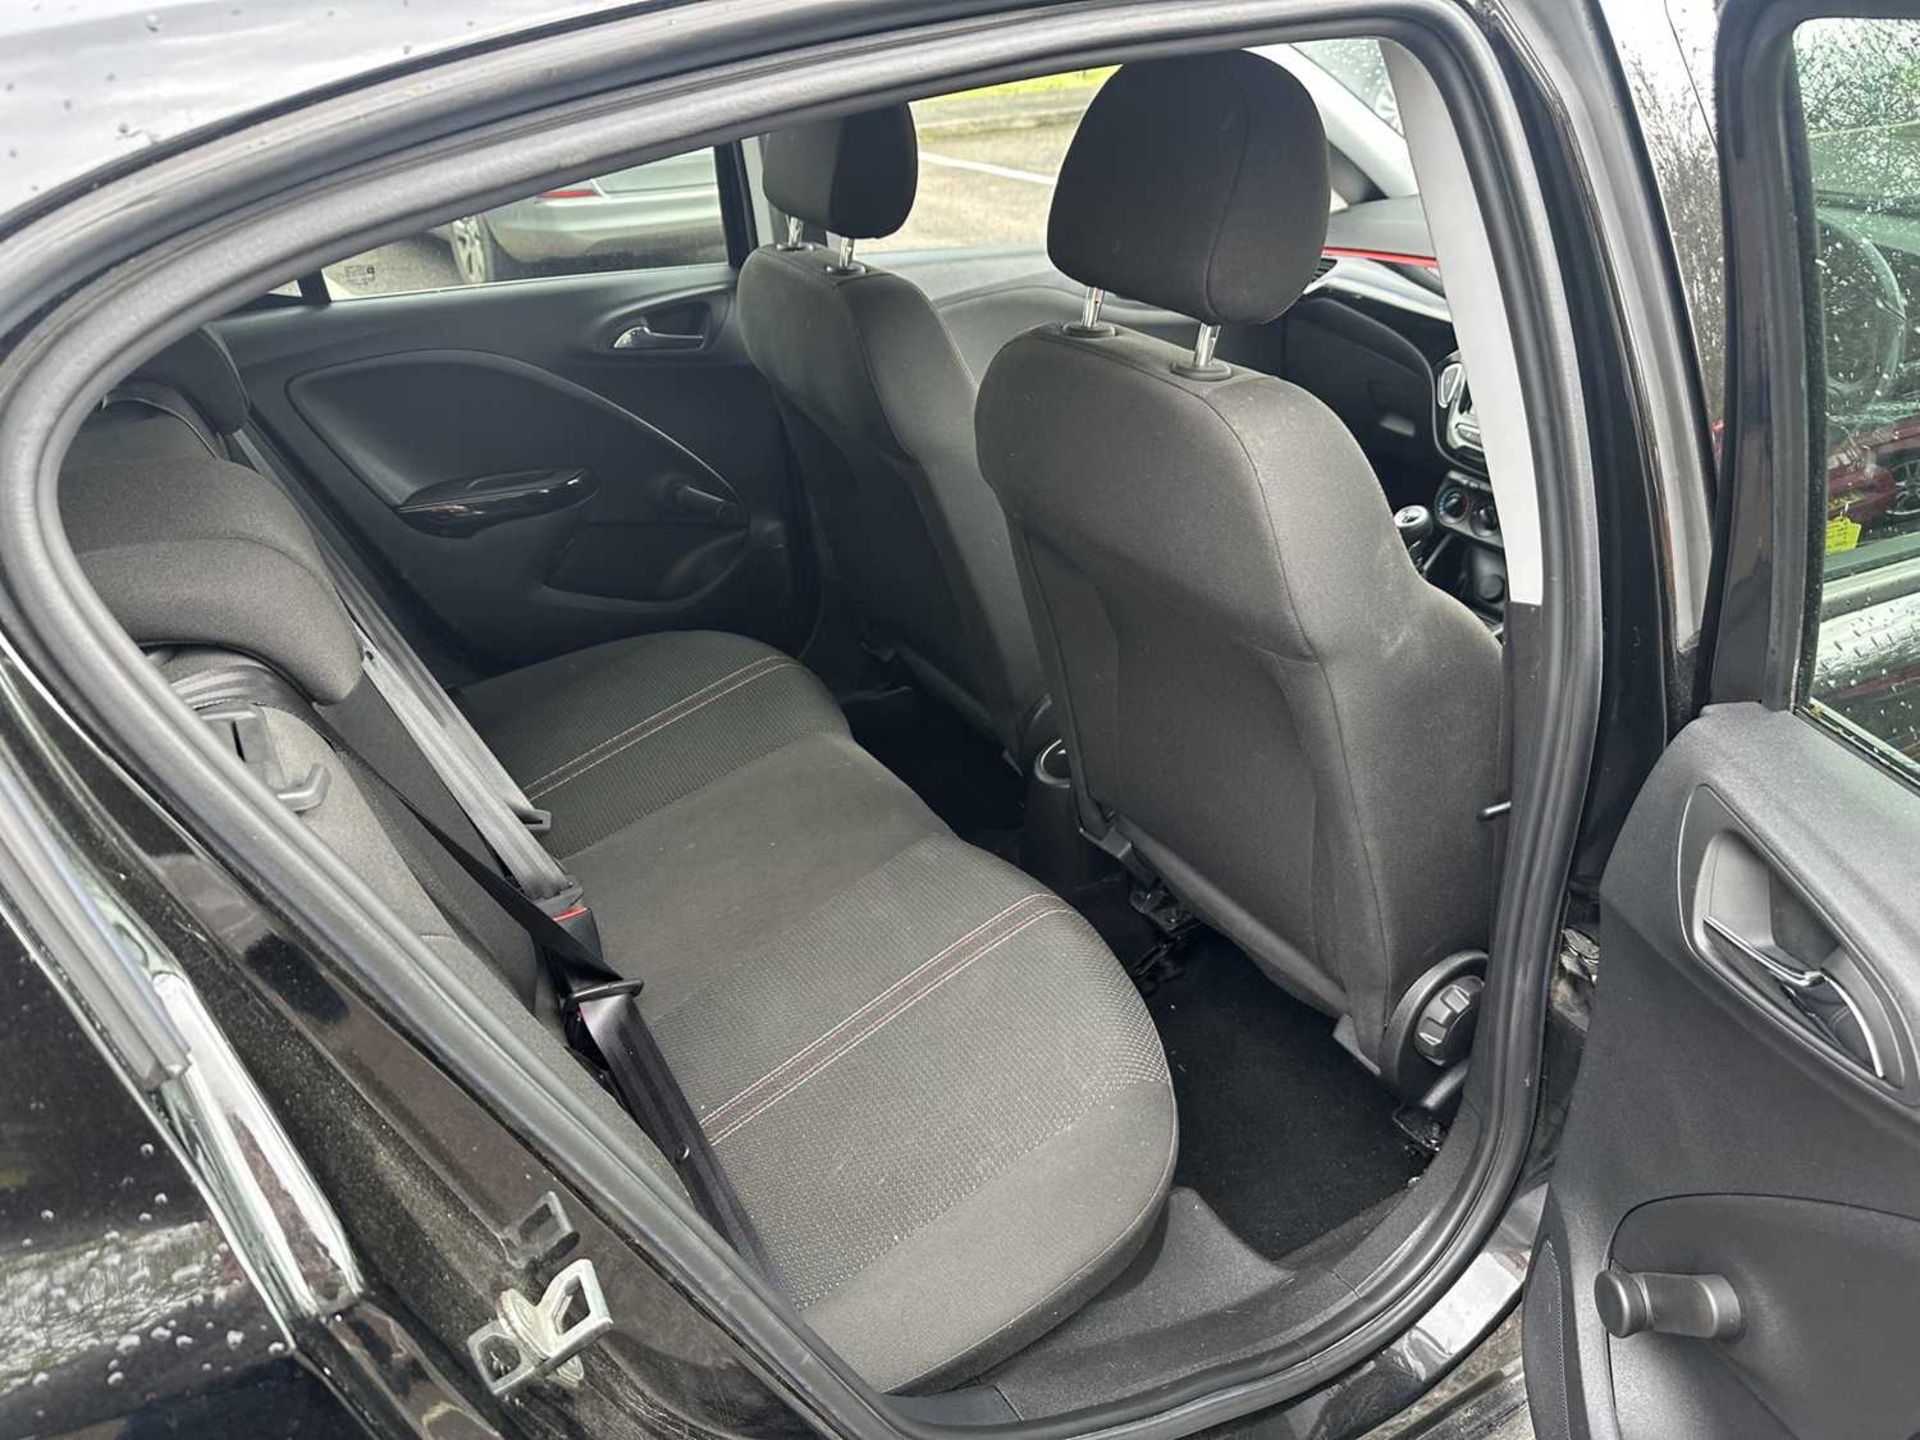 2019 Vauxhall Corsa SRI VX - Line Nav Black, 5 door hatchback, manual, reg. no. VU19 RYK - Bild 9 aus 15